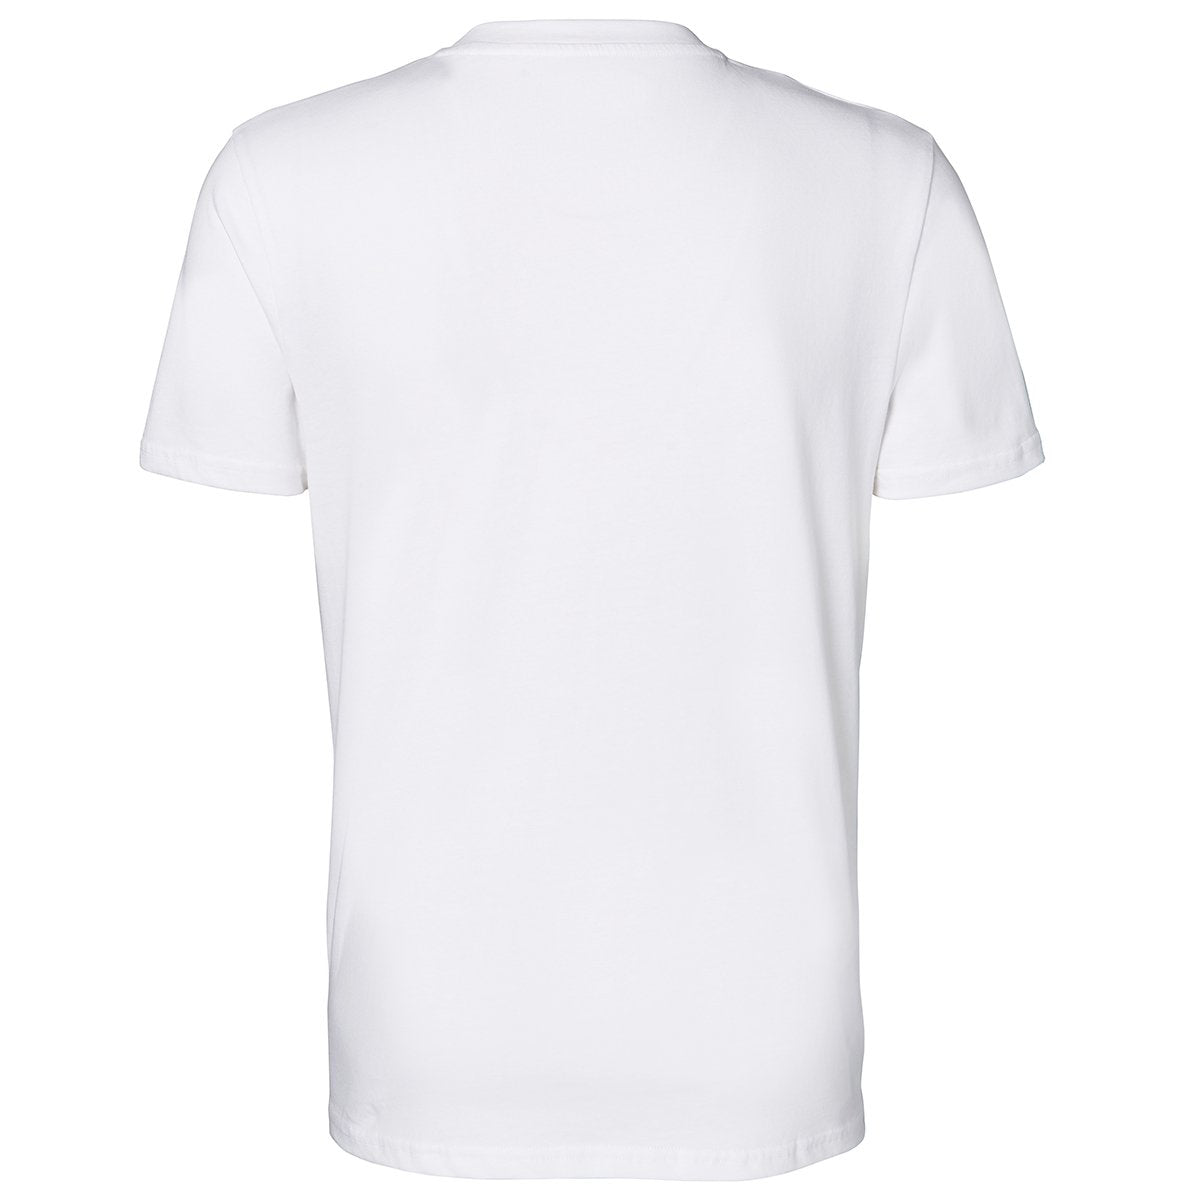 Camiseta Carmes blanco hombre - Imagen 2